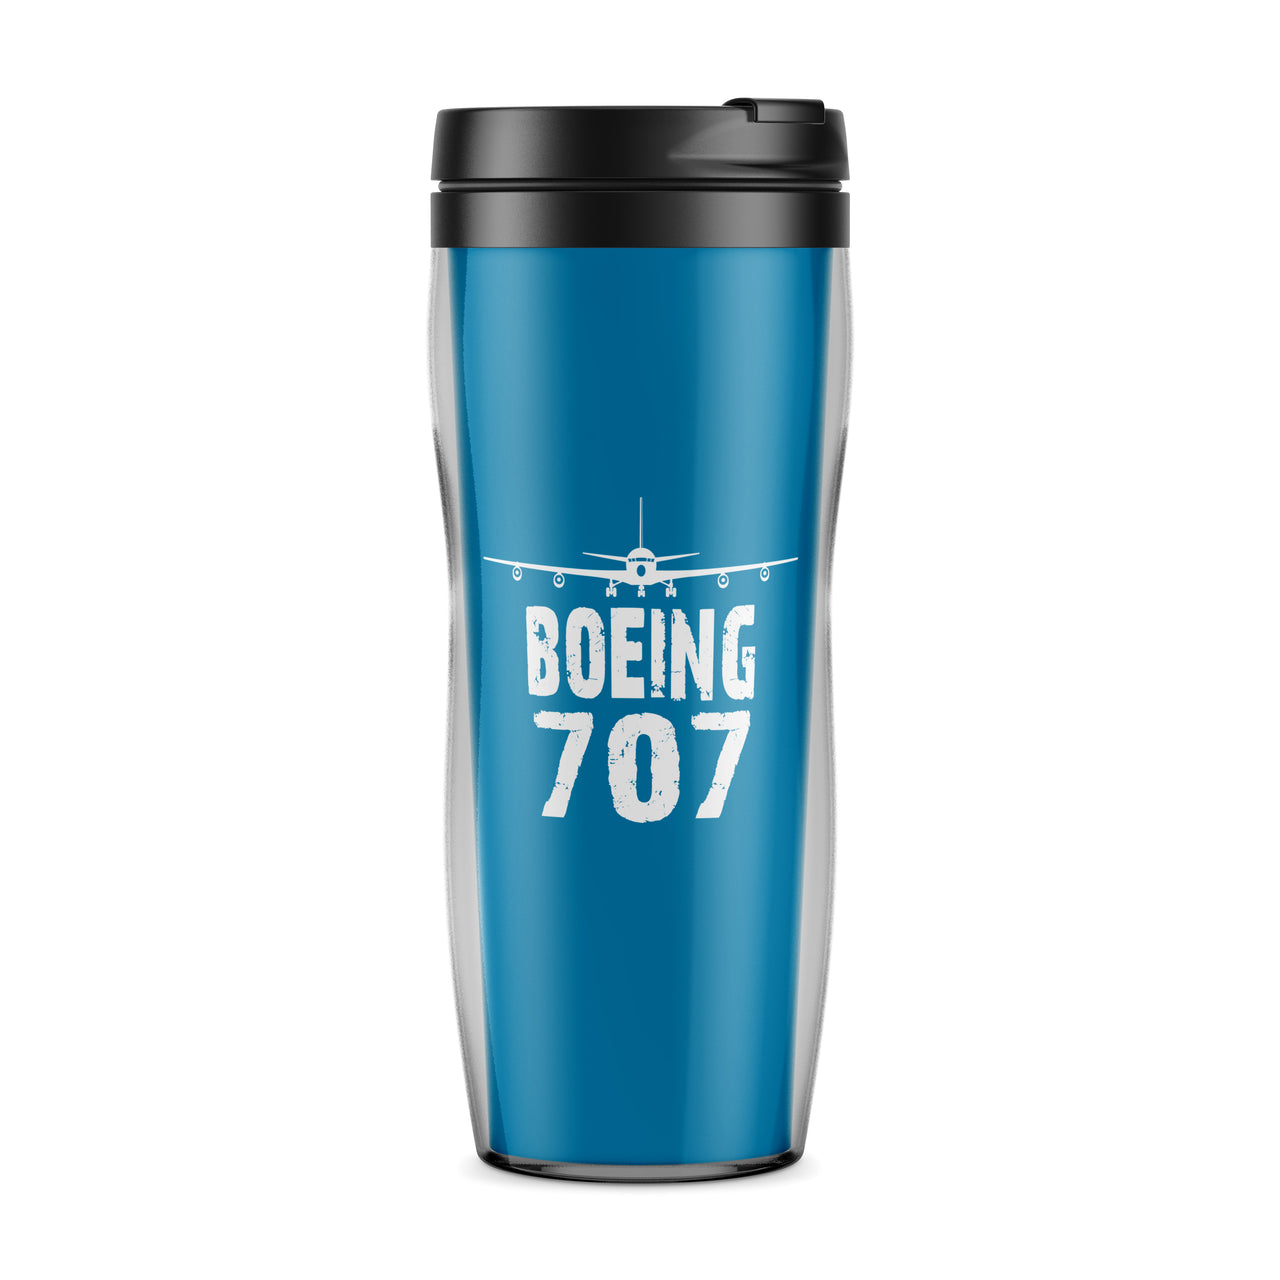 Boeing 707 & Plane Designed Travel Mugs